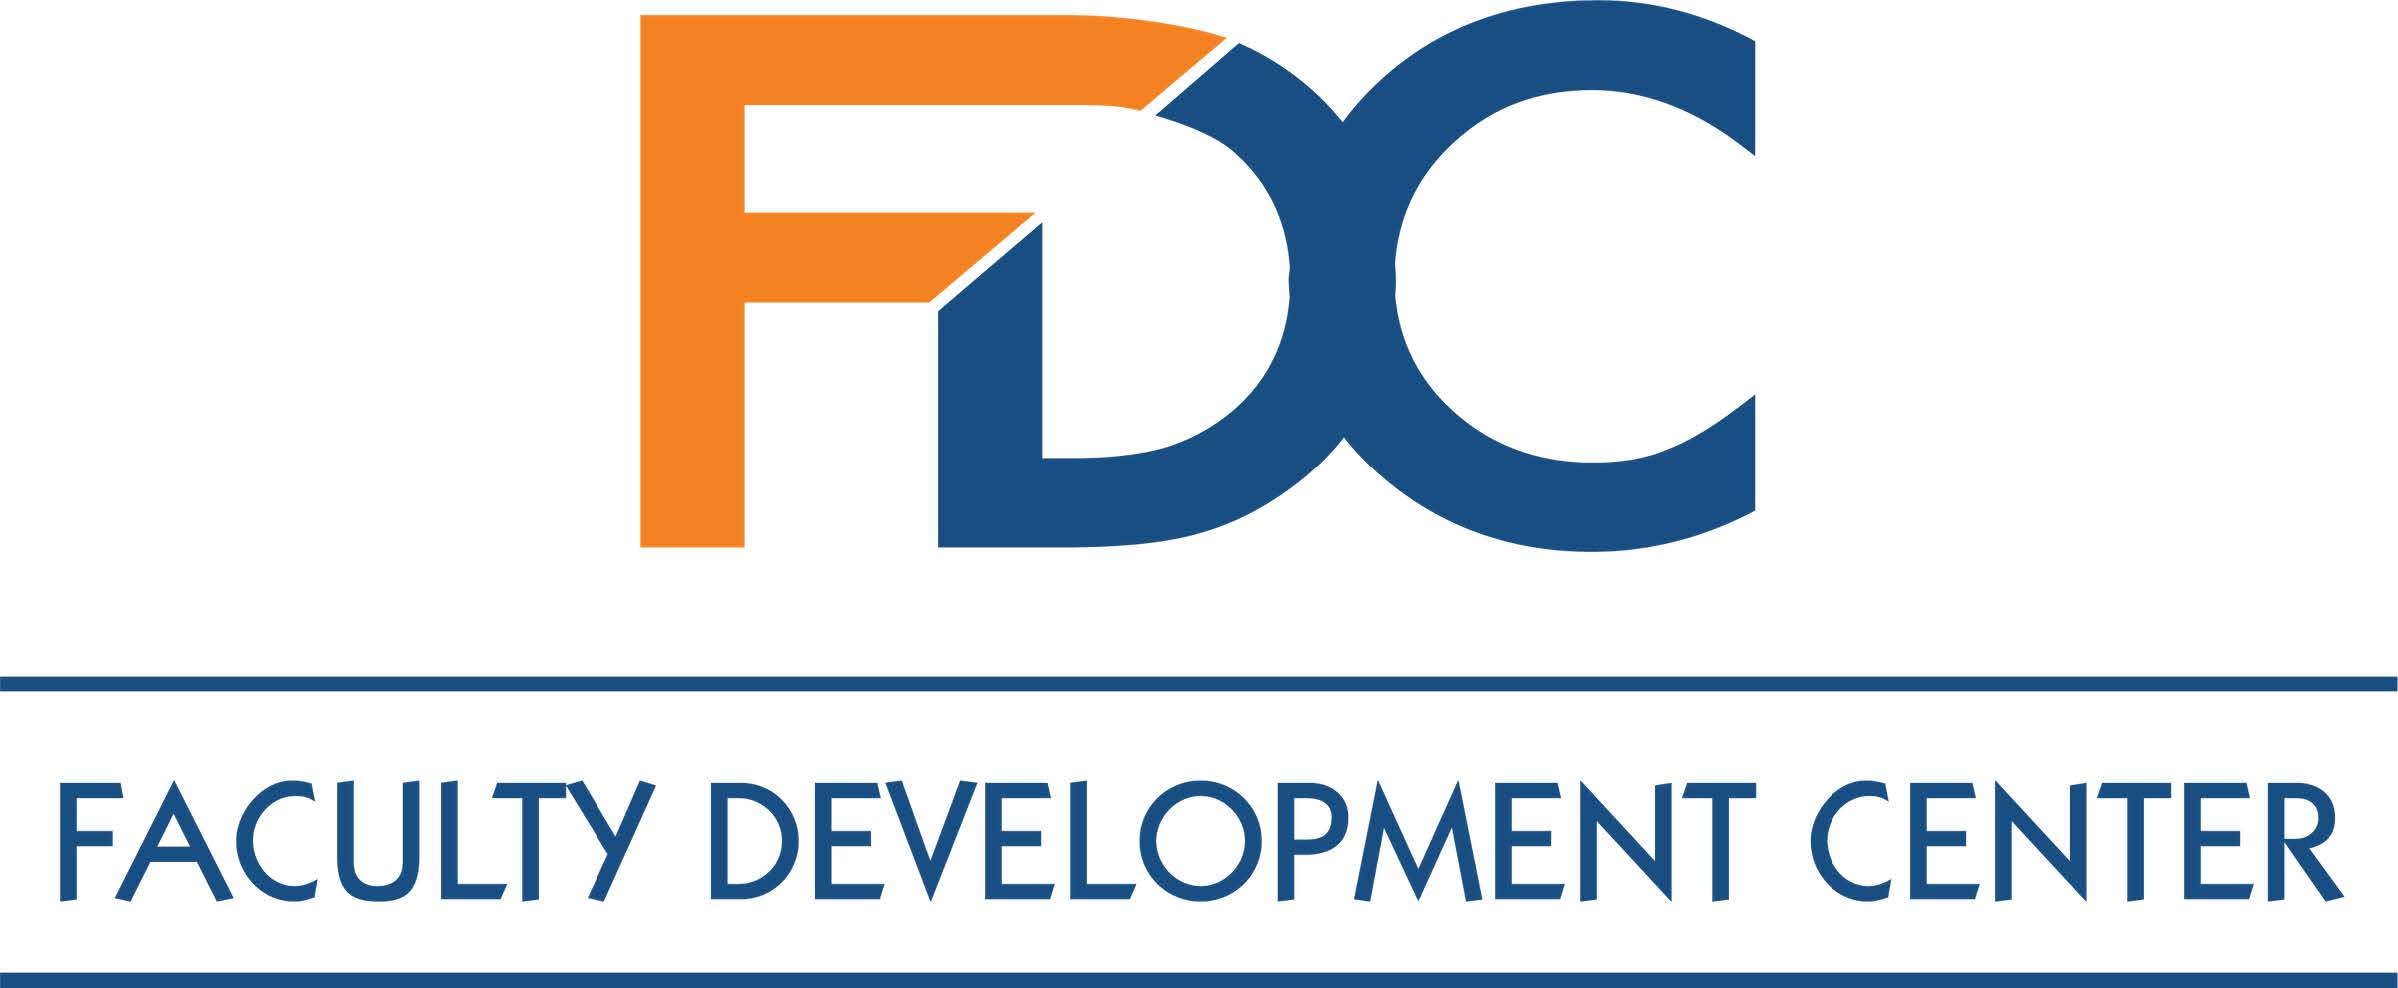 Faculty Development Center logo